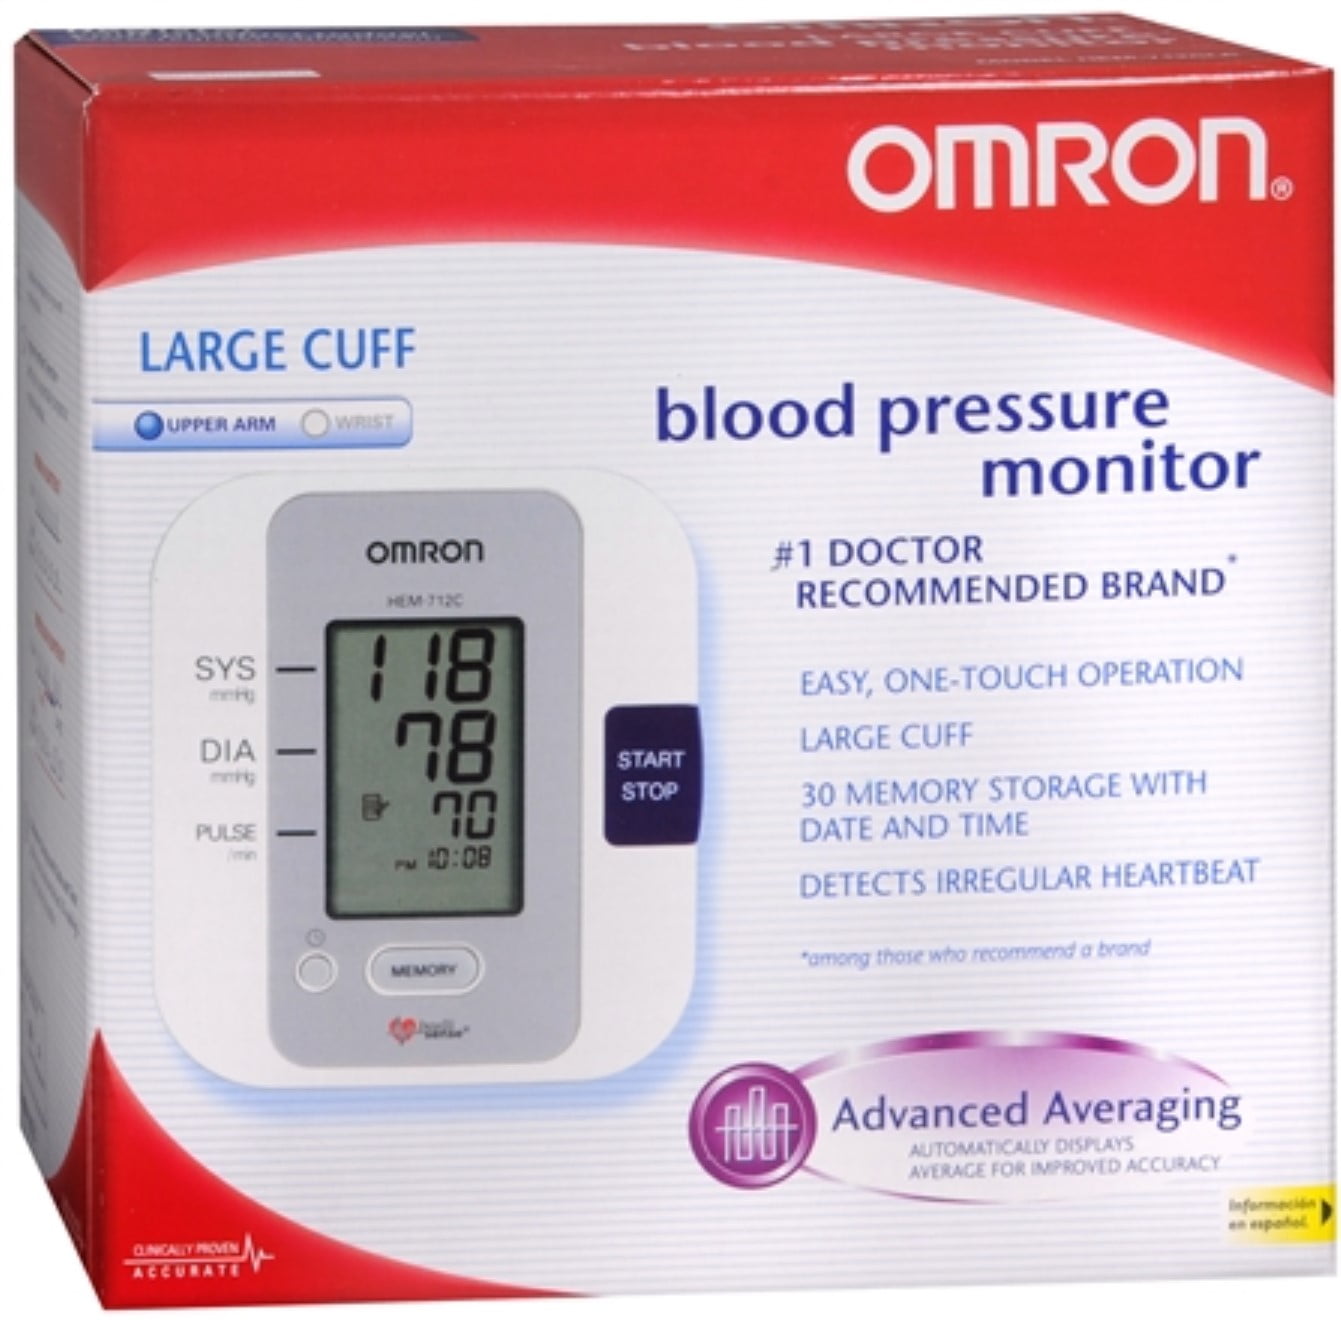 Omron brings digital blood pressure monitors to travel retail